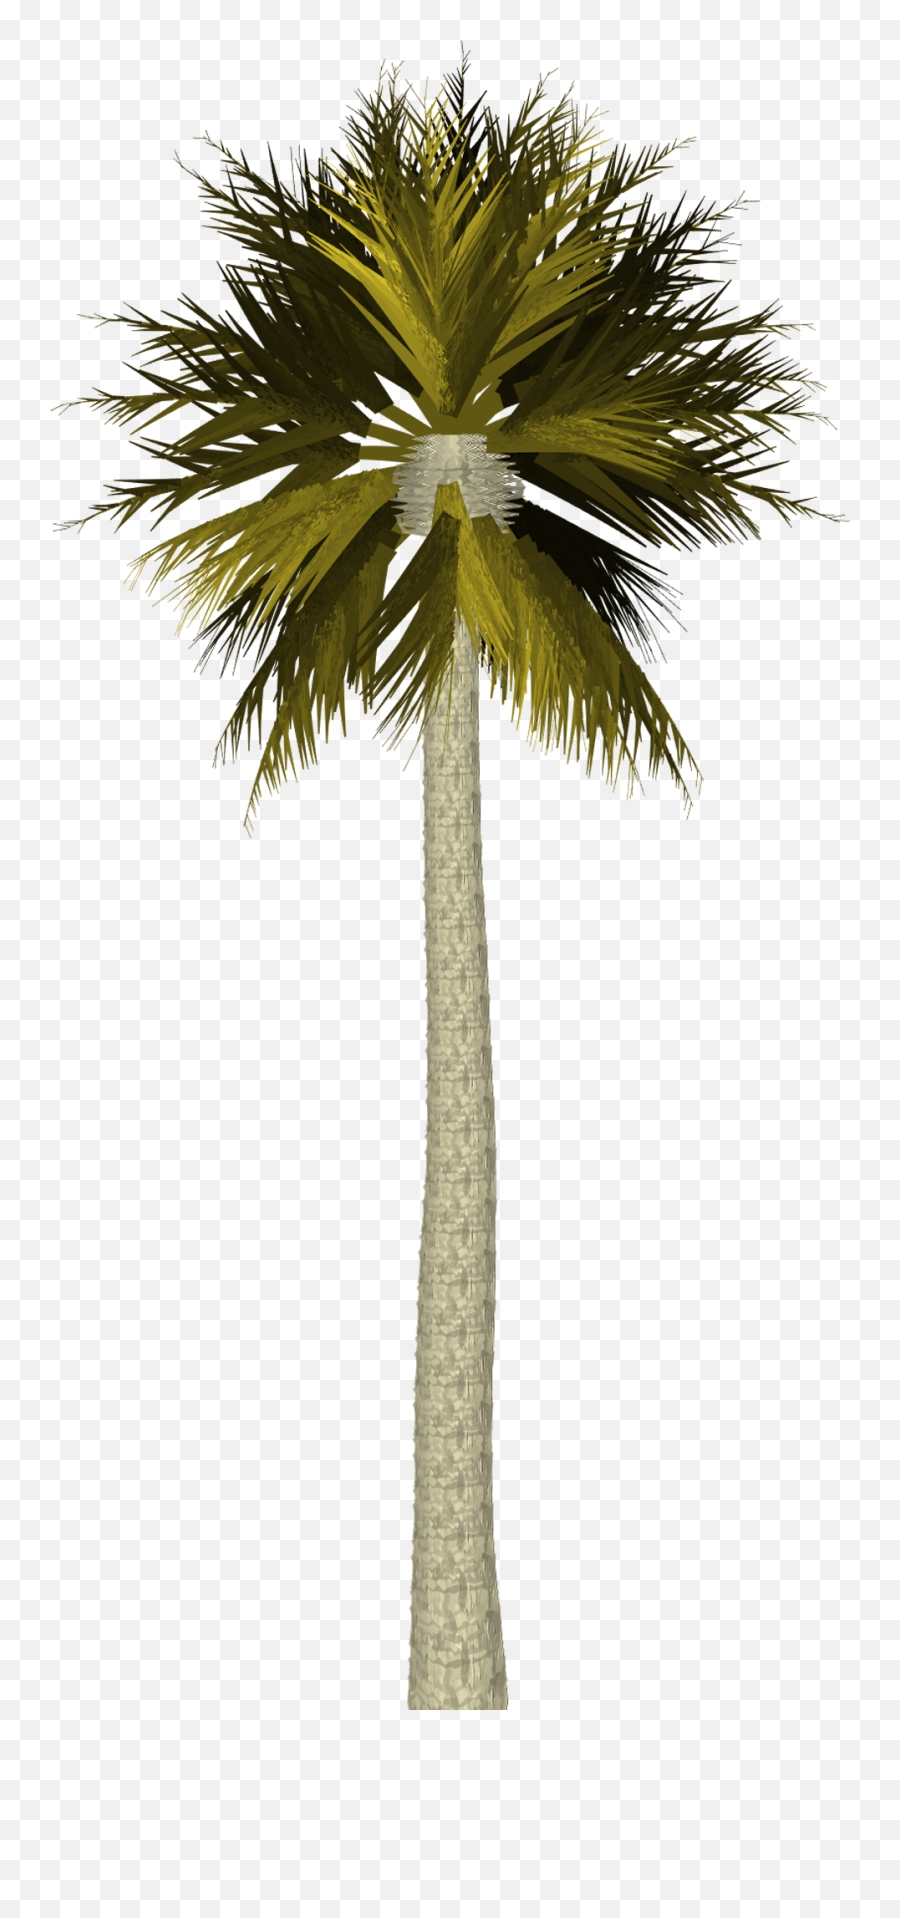 Palm Tree - Free Image On Pixabay Palm Tree Photoshop Png,Tropical Leaf Png